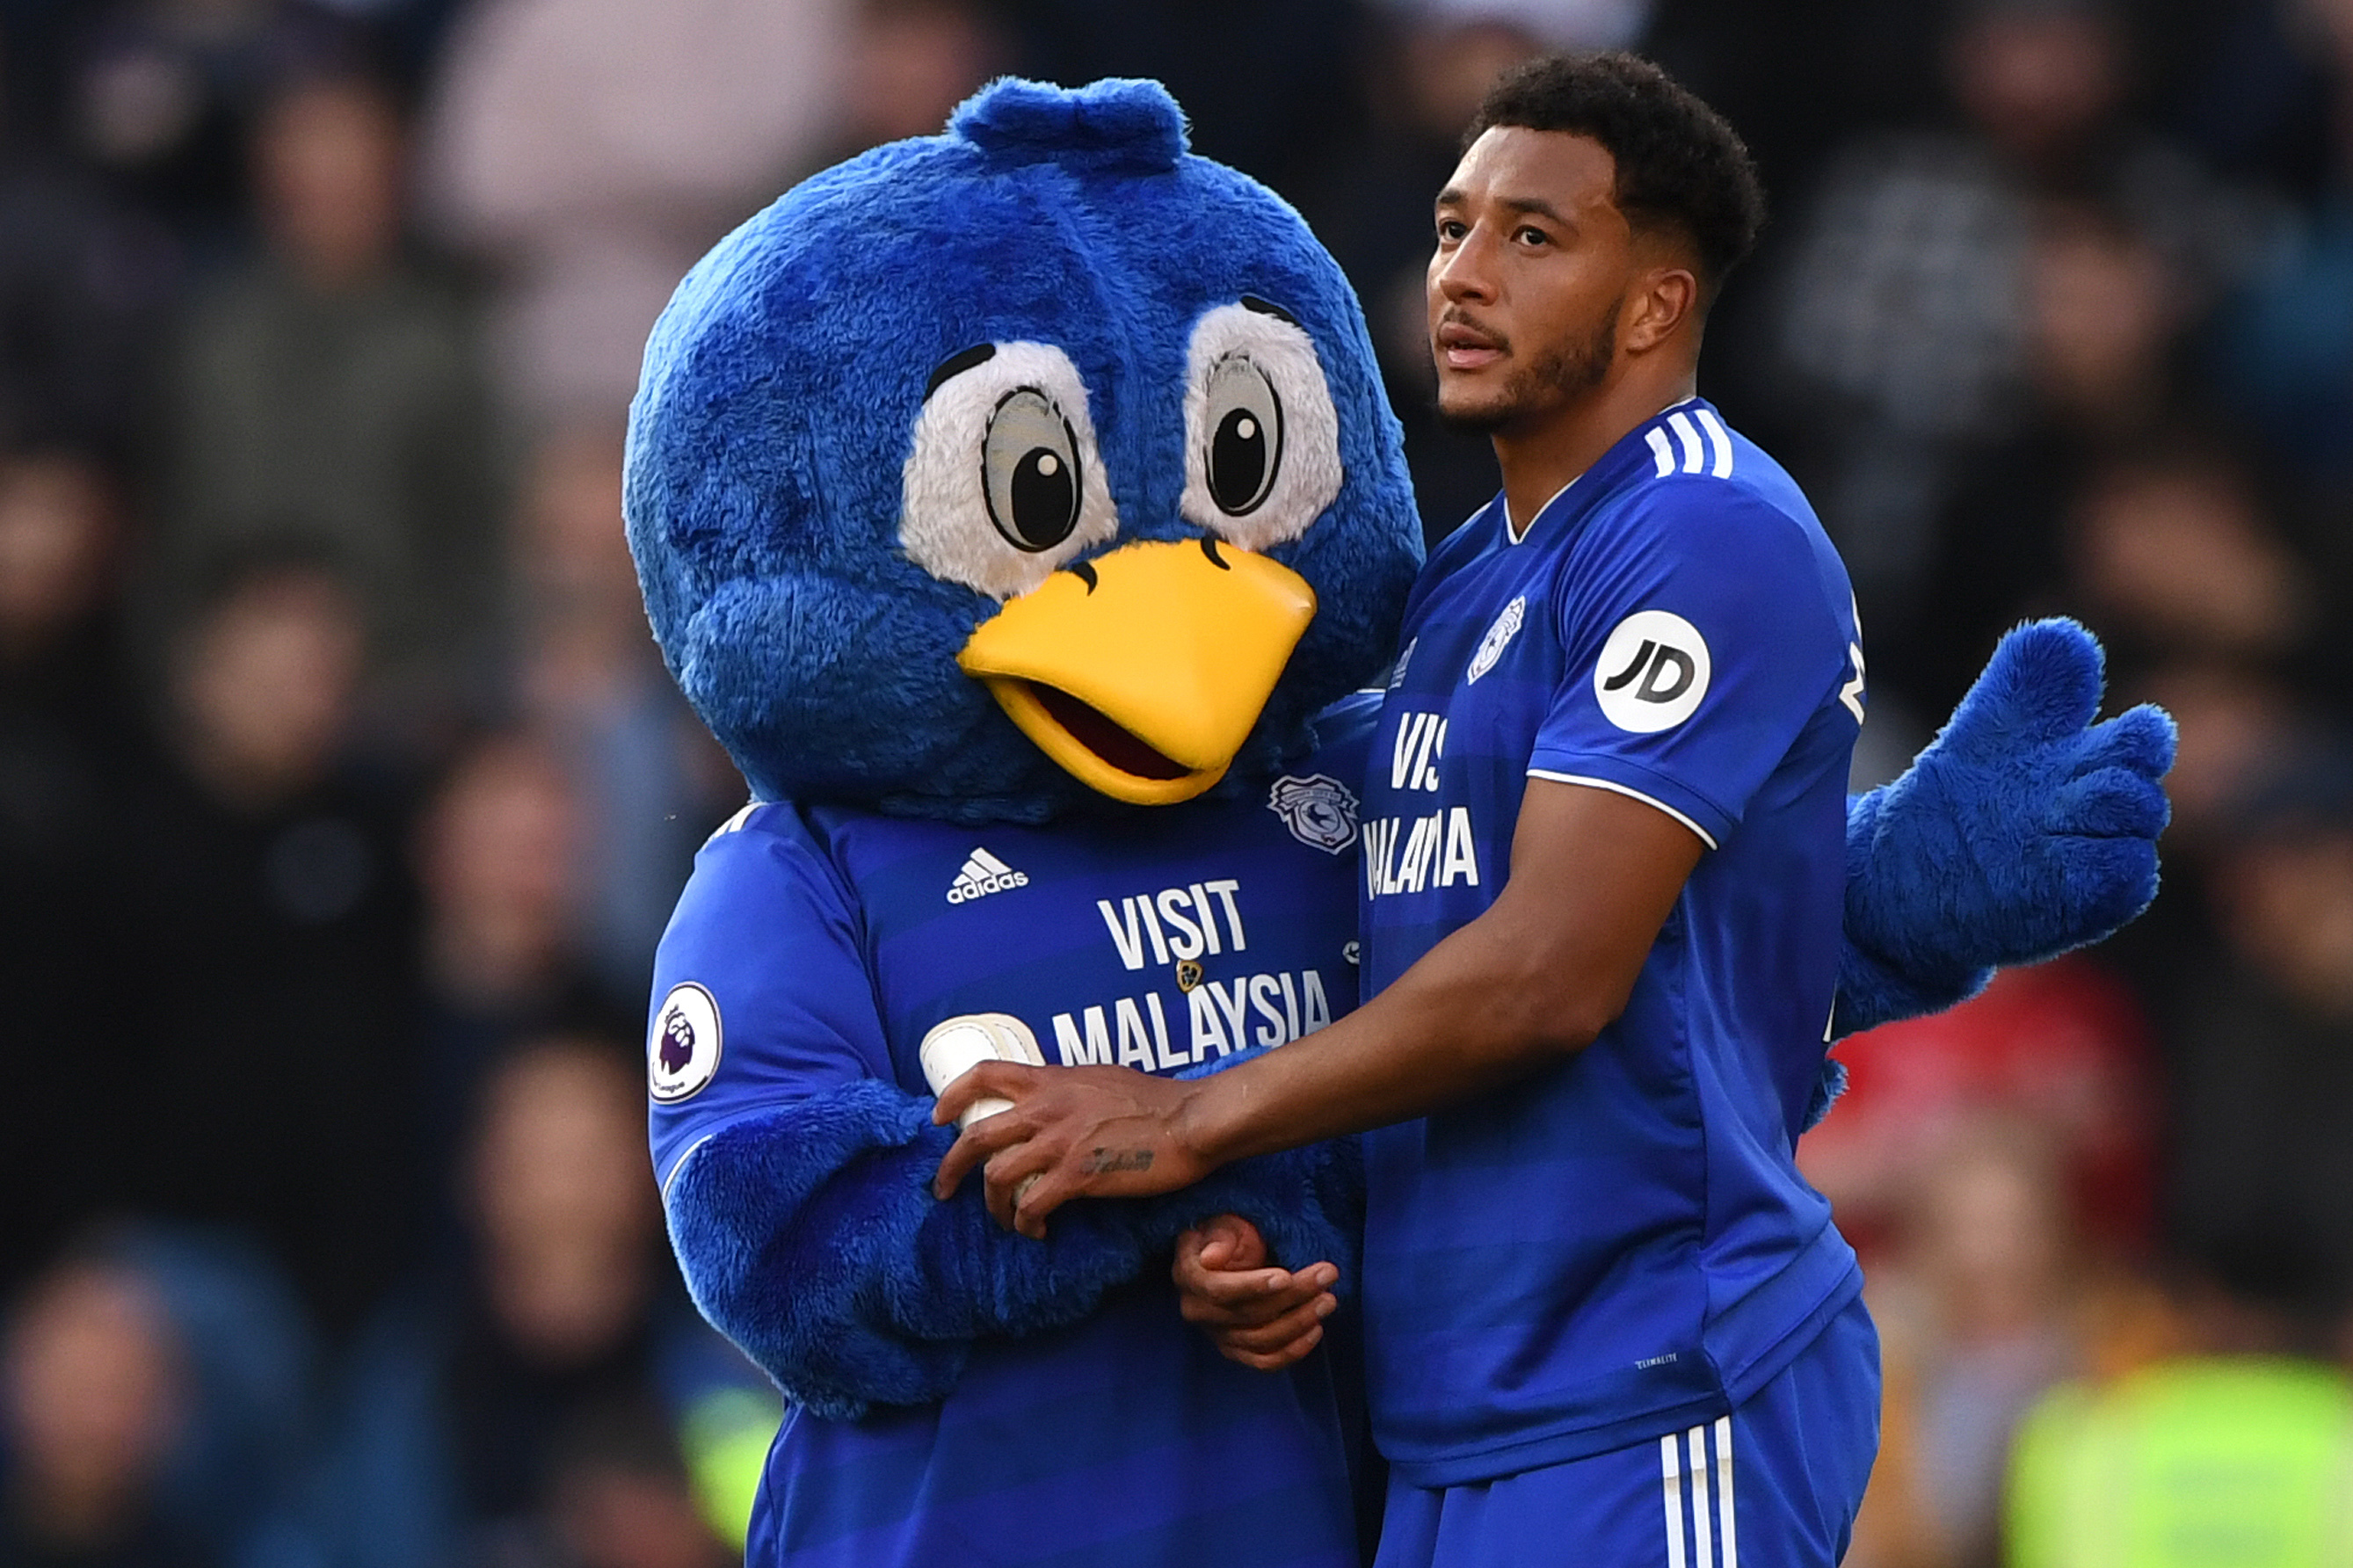 Huddersfield Town 0-4 Cardiff City: Bluebirds climb into play-off